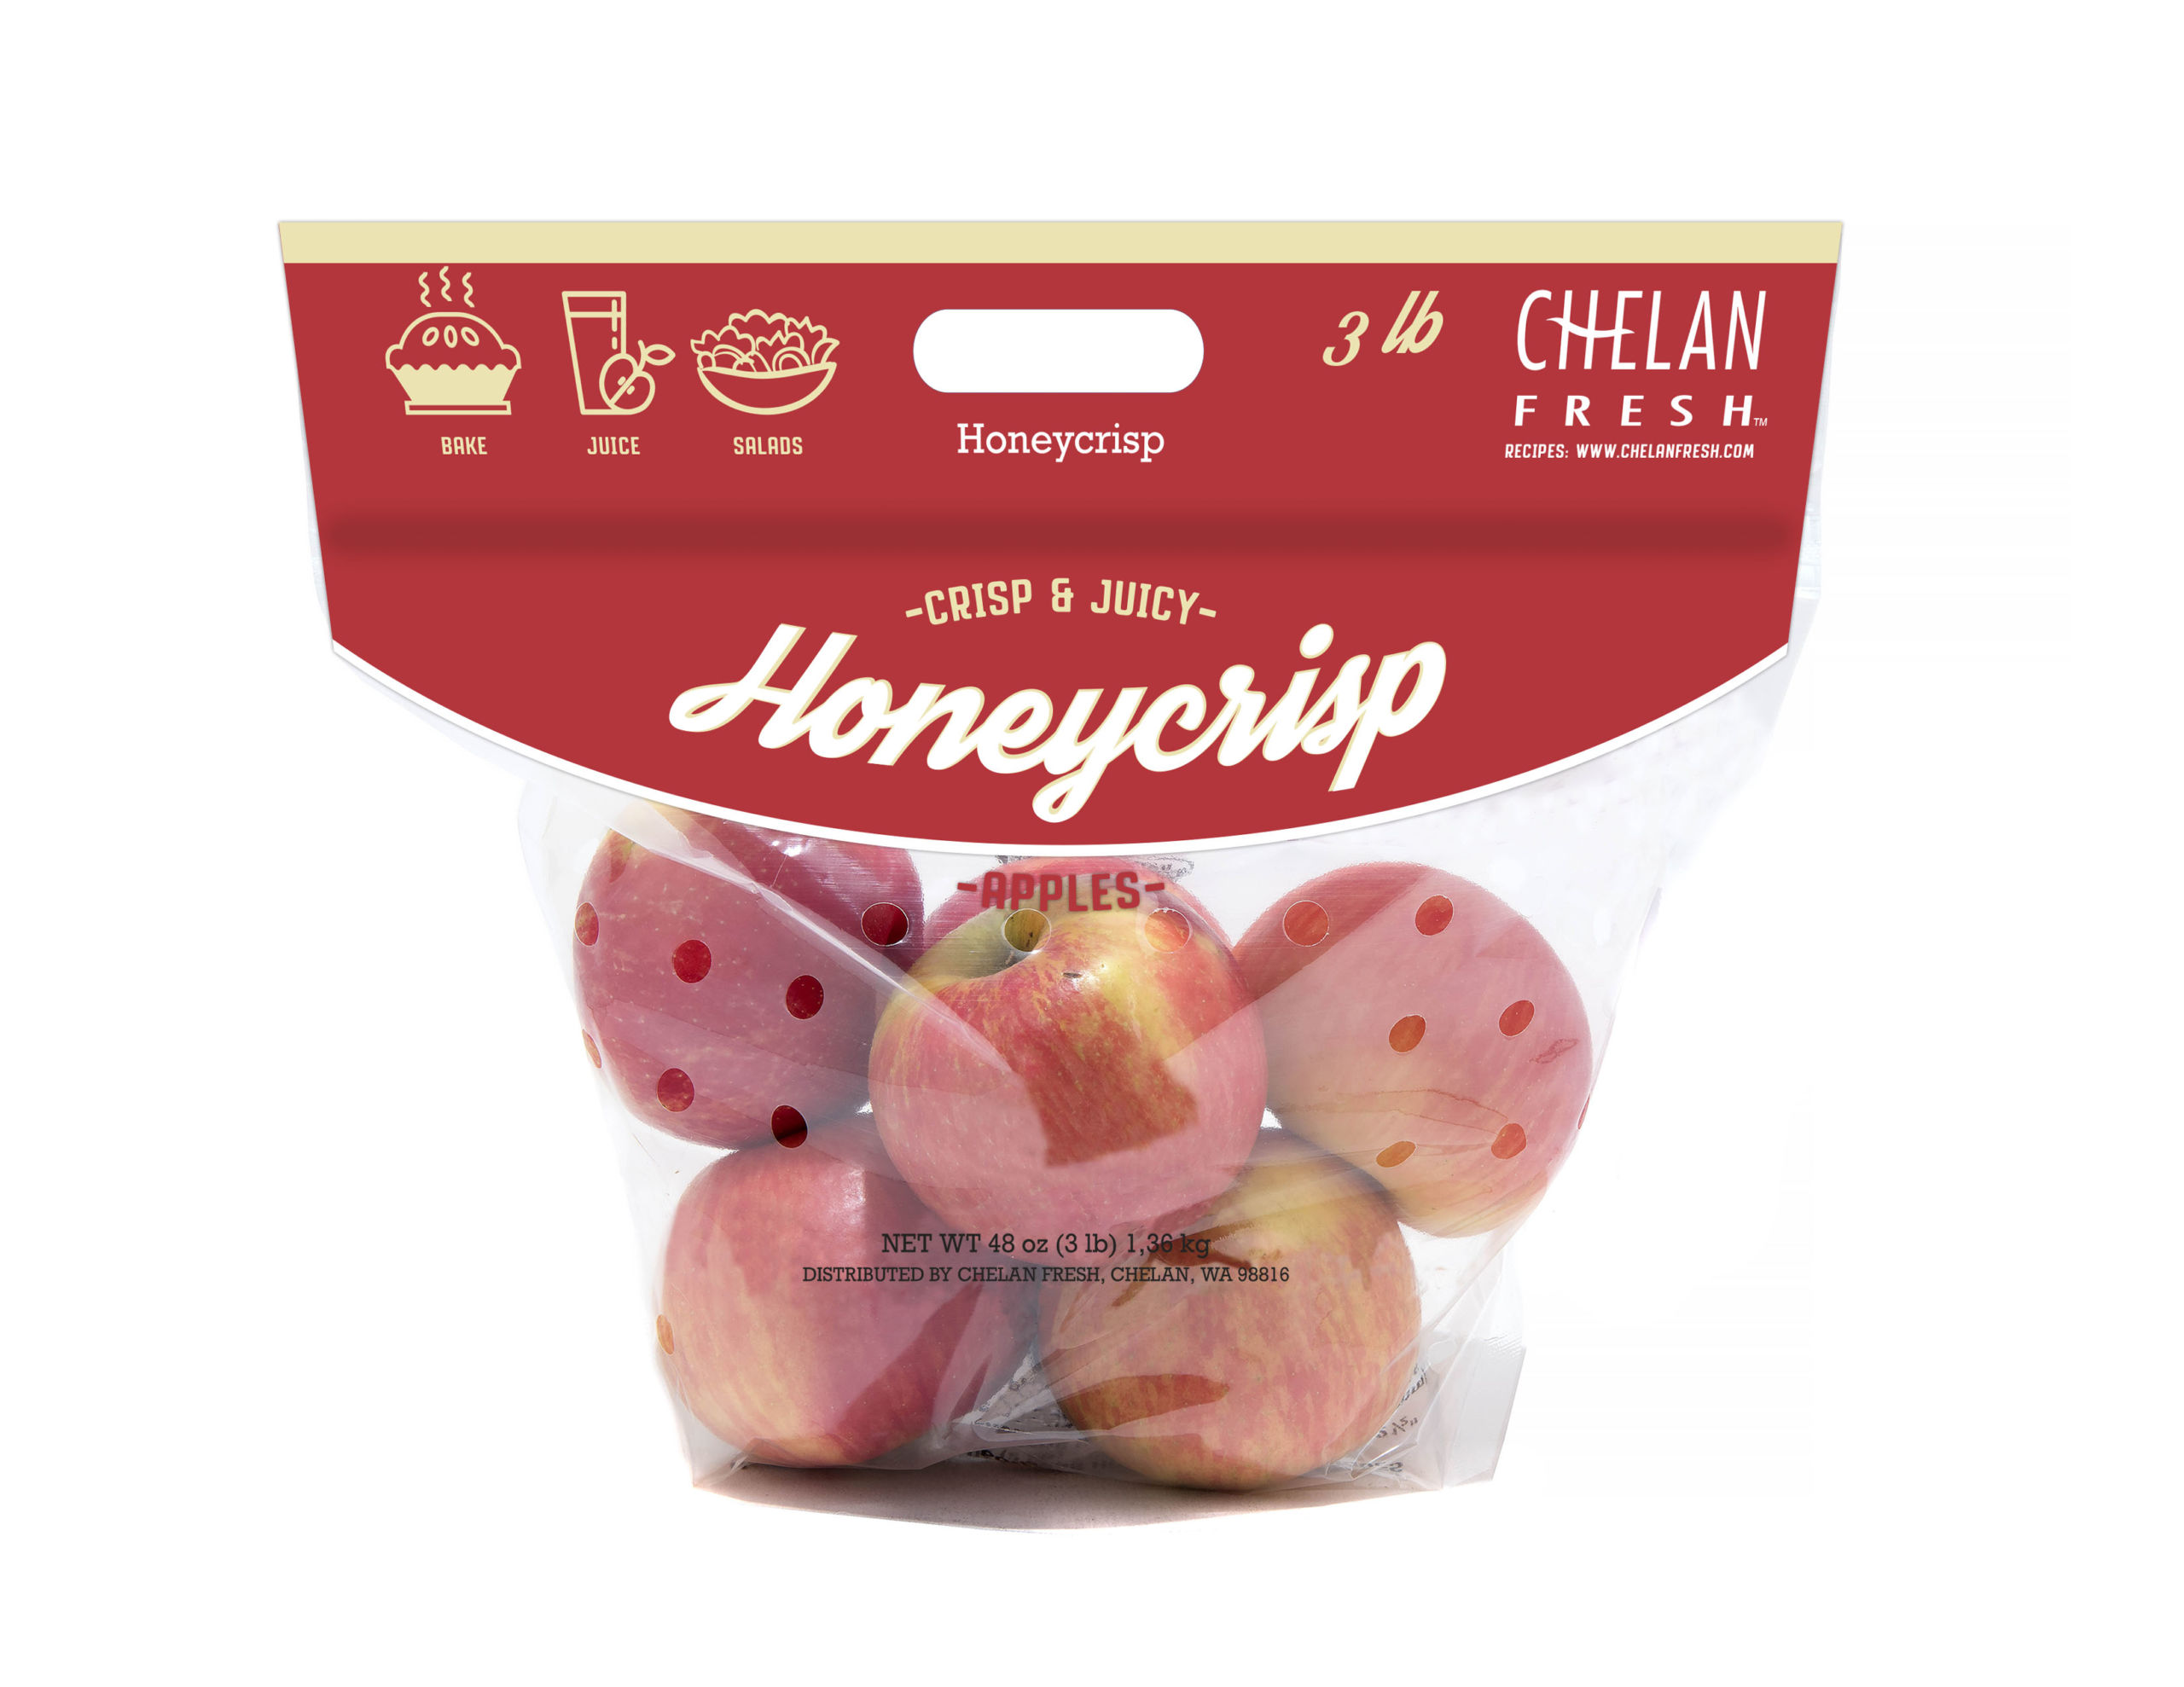 Chelan Fresh Honeycrisp apples